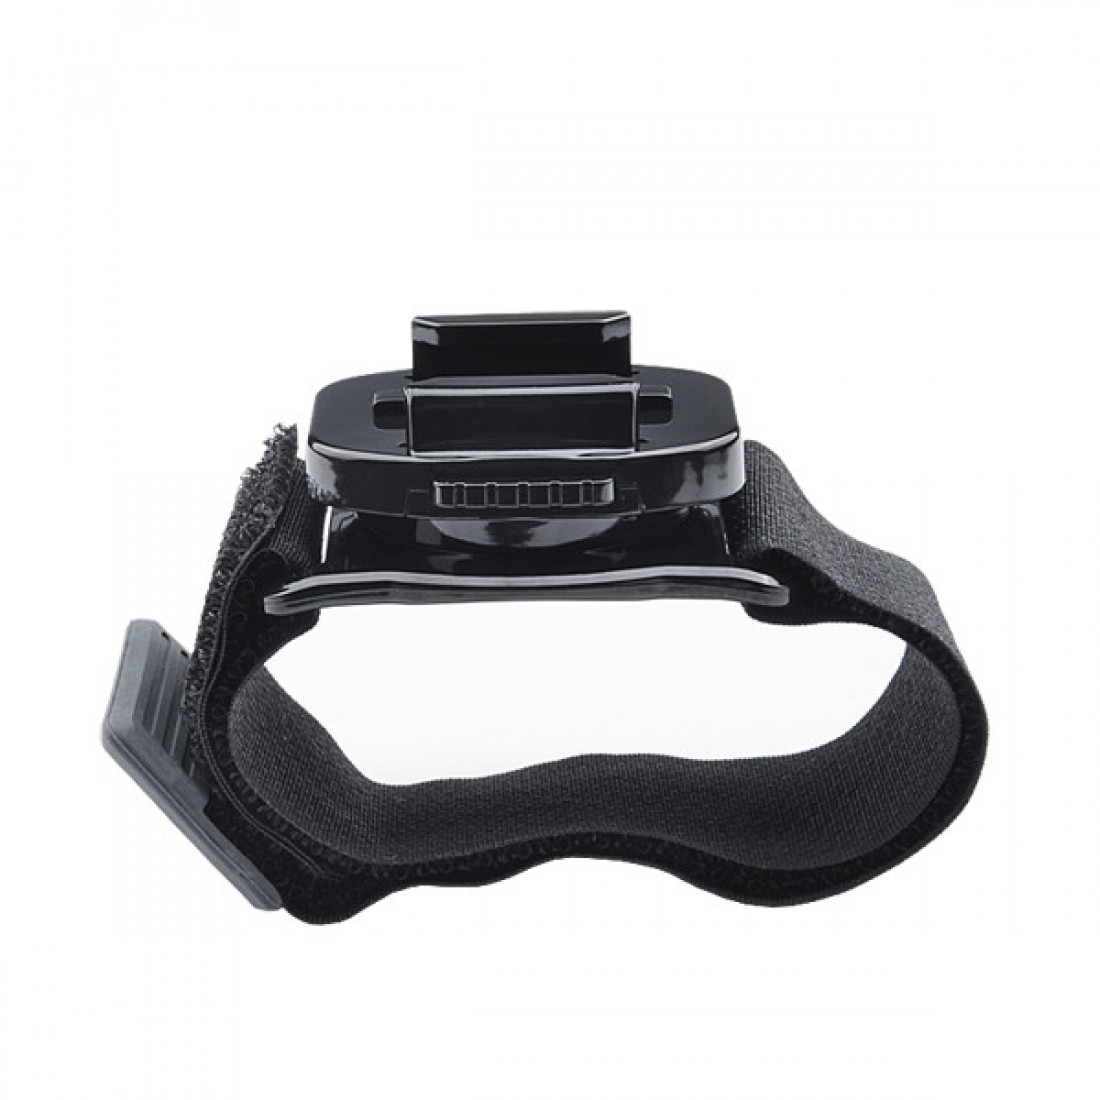 Wrist strap + rotatable mount: DZ-302